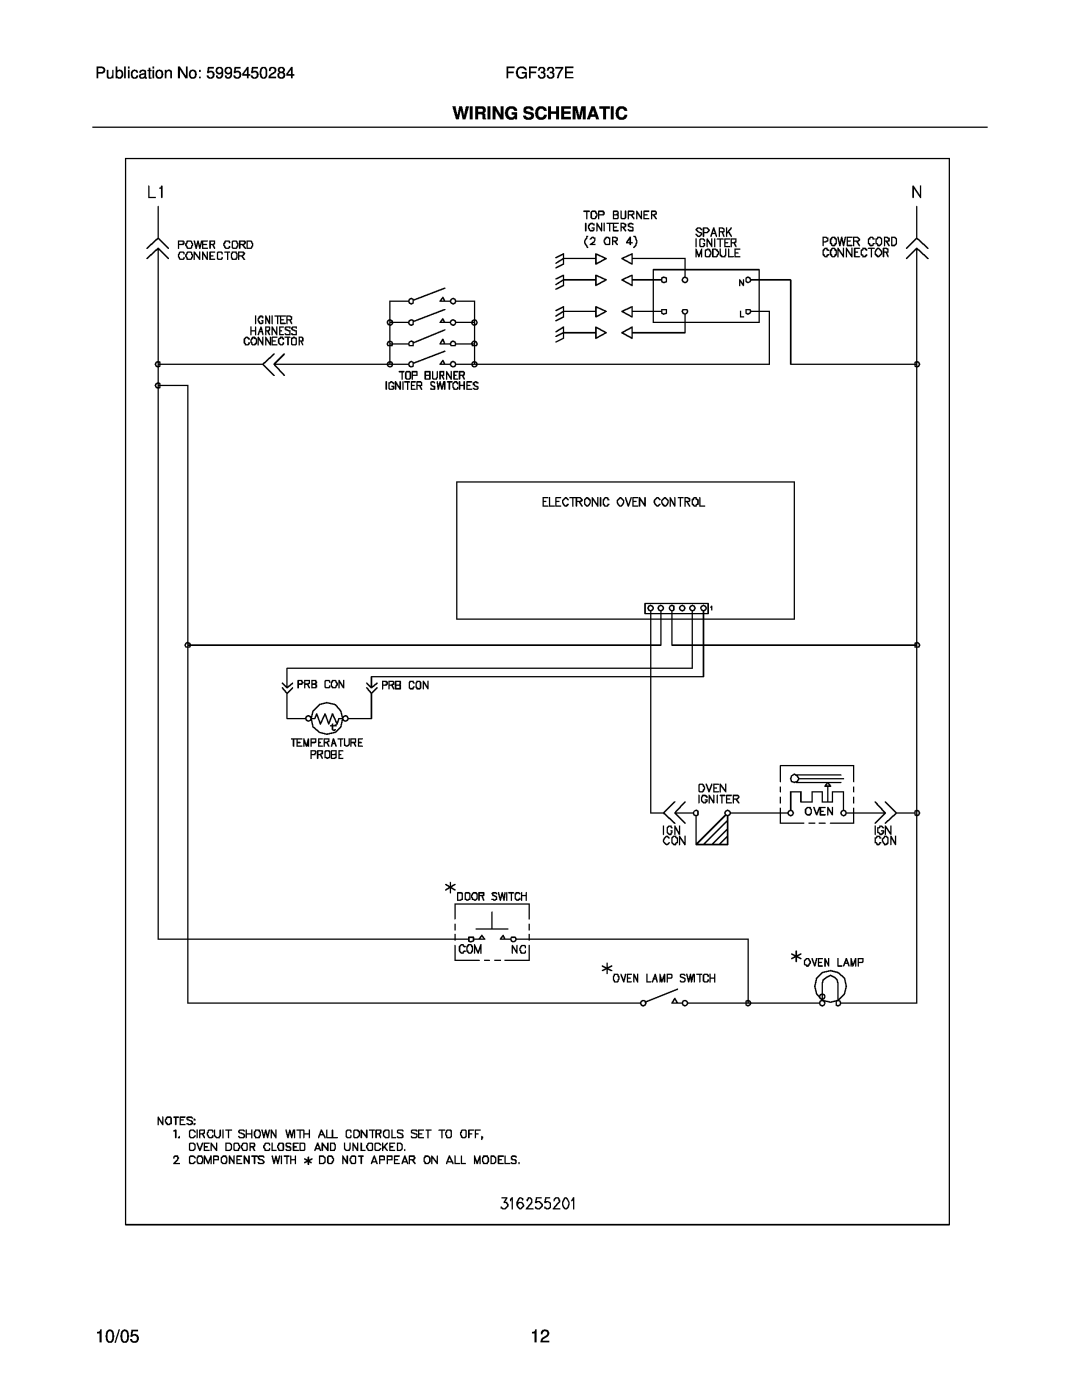 Frigidaire FGF337E installation instructions Wiring Schematic, 10/05 